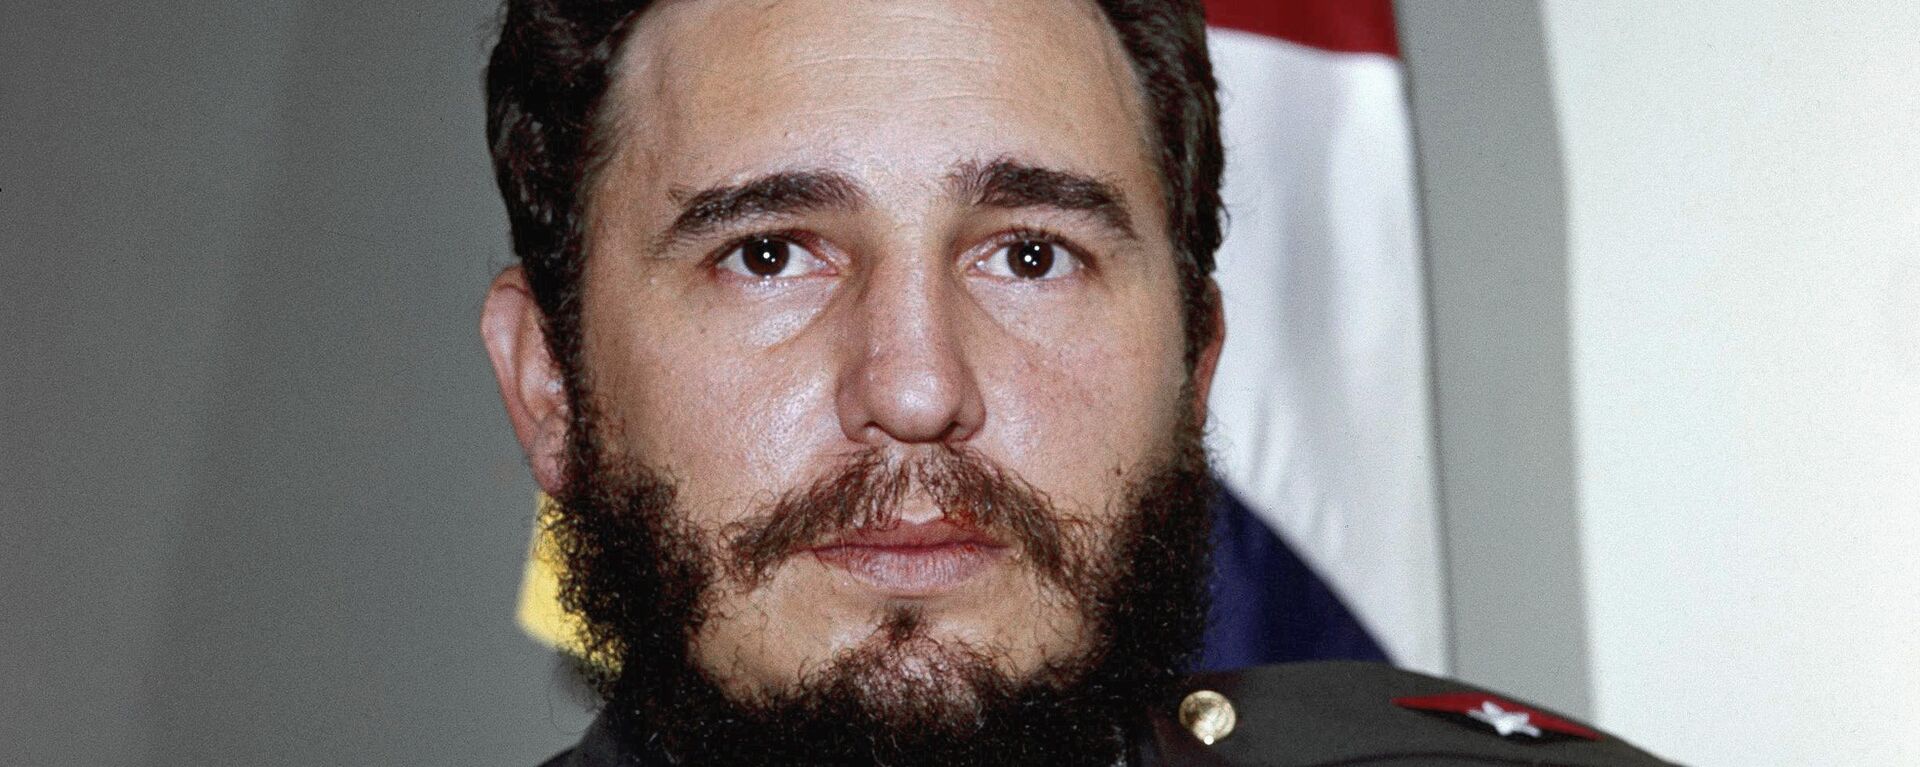 Fidel Castro, lider cubano (archivo) - Sputnik Mundo, 1920, 16.10.2018